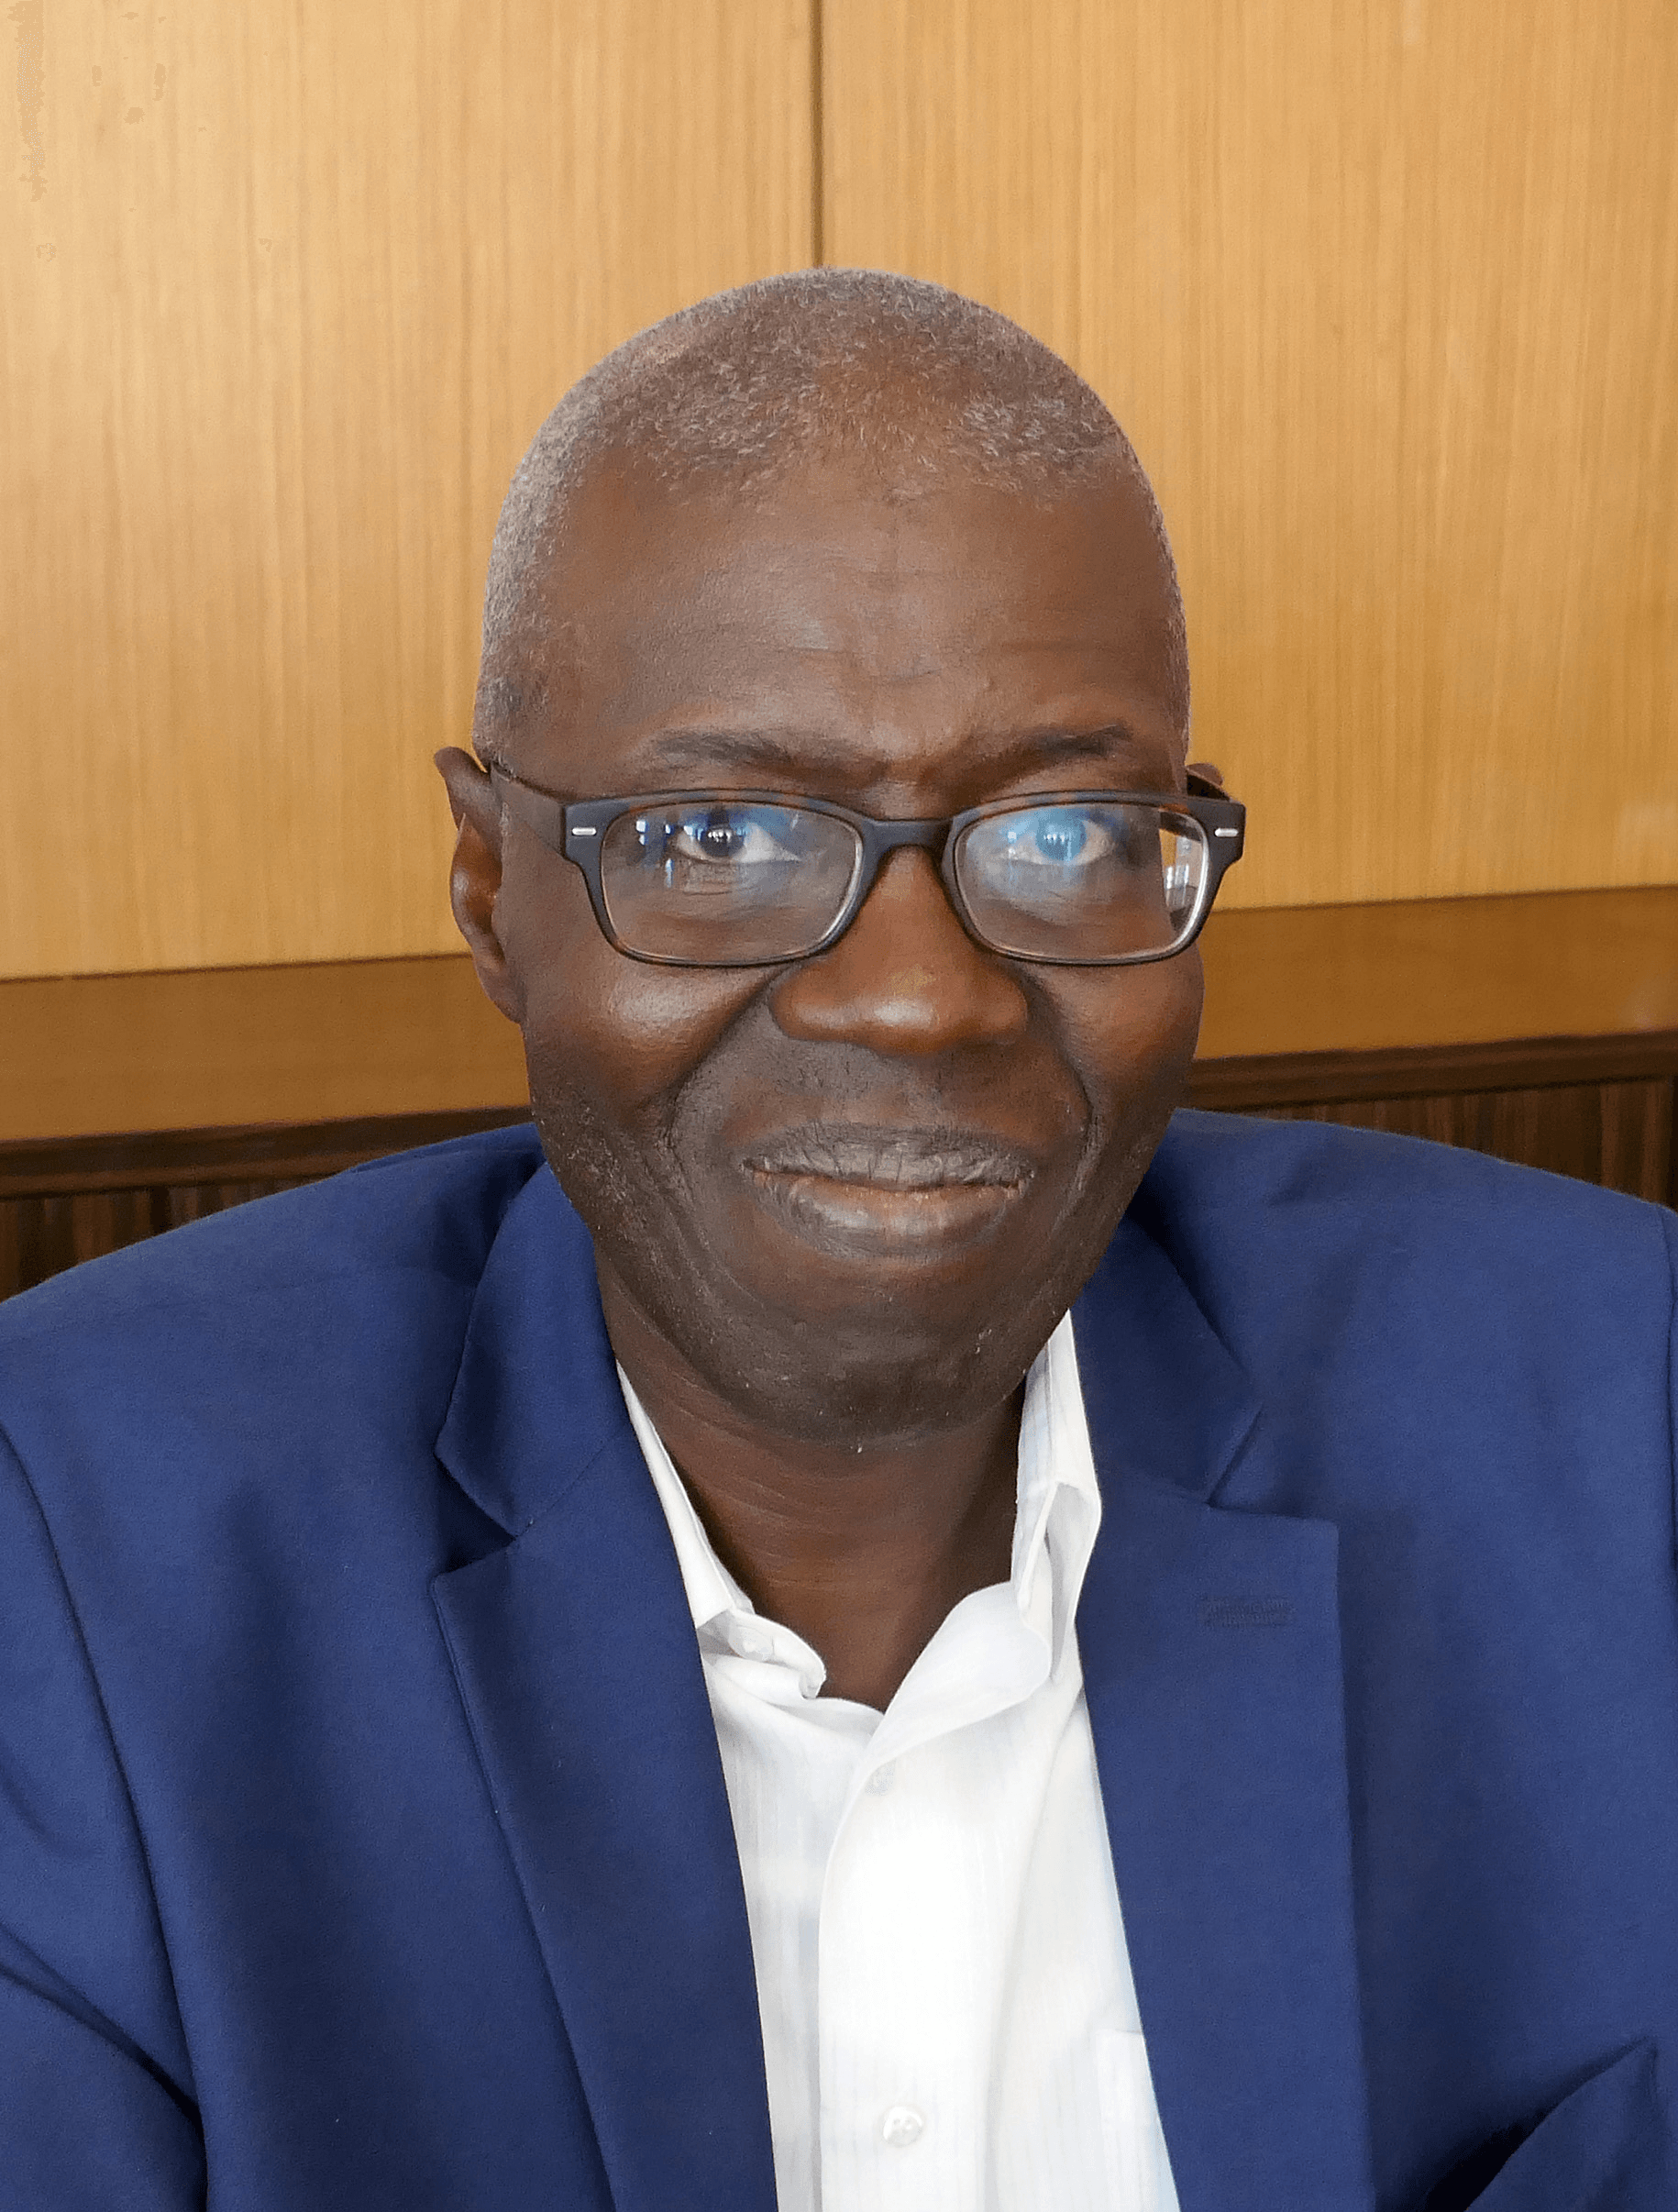 Souleymane Bachir Diagne. Ji-Elle, CC BY-SA 4.0 <https://creativecommons.org/licenses/by-sa/4.0>, via Wikimedia Commons